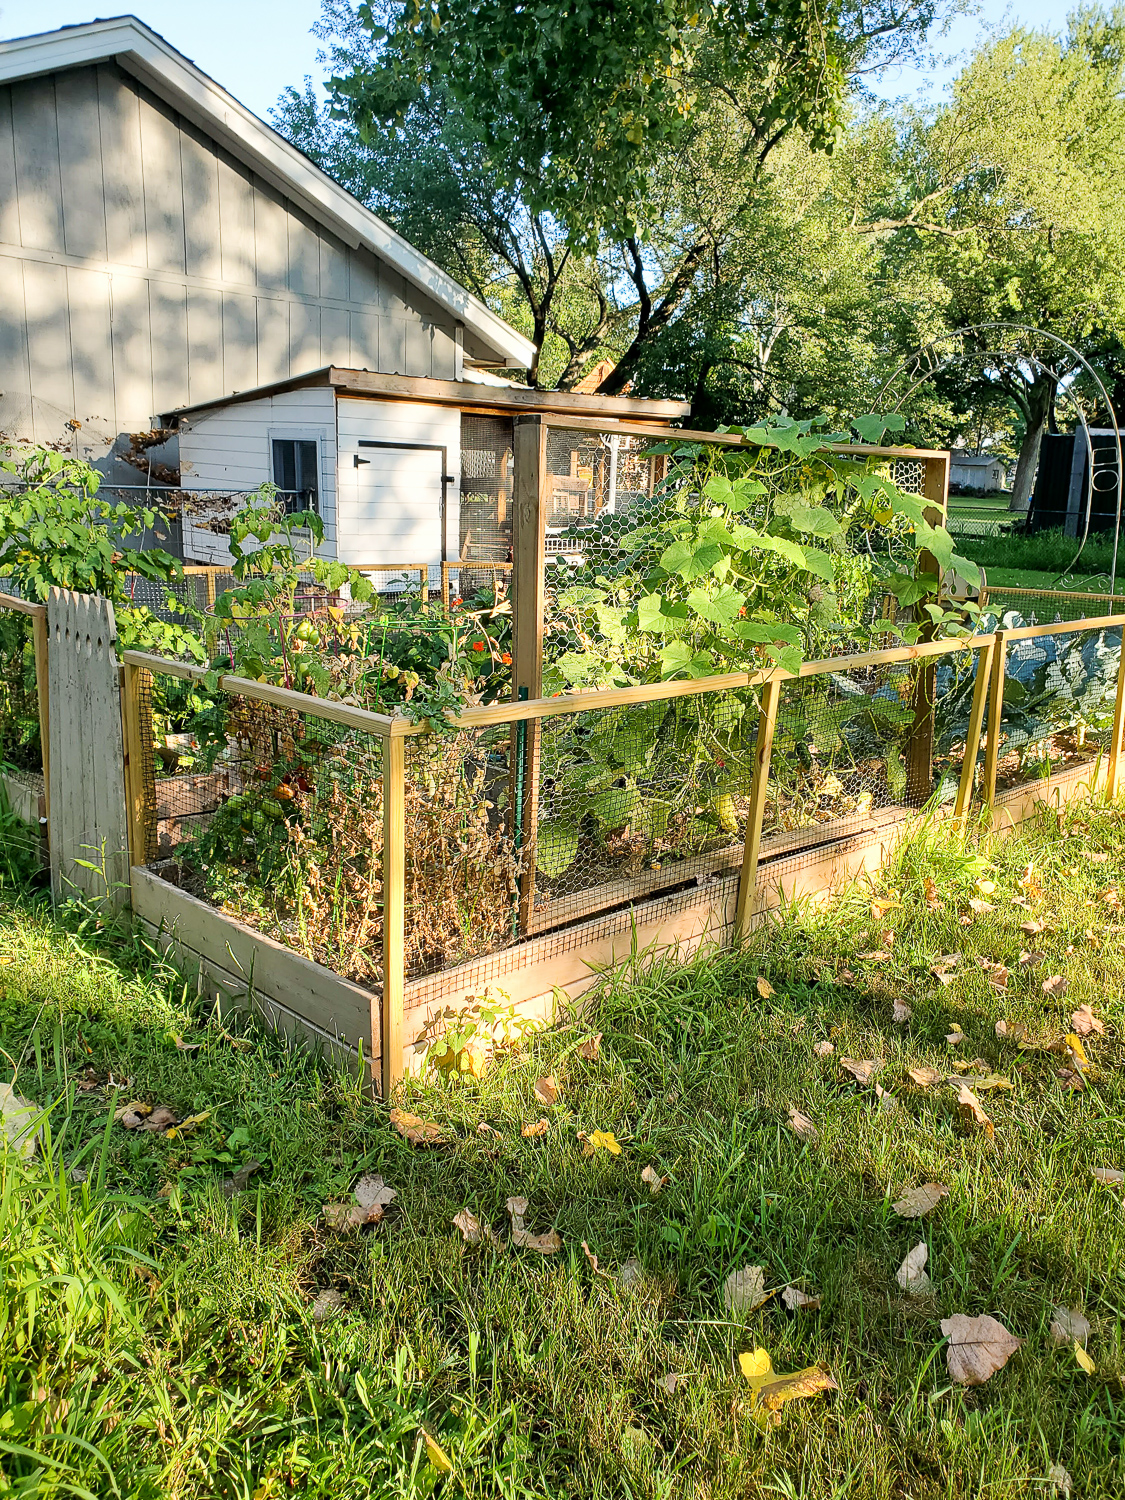 rectangle vegetable garden design with raised garden beds